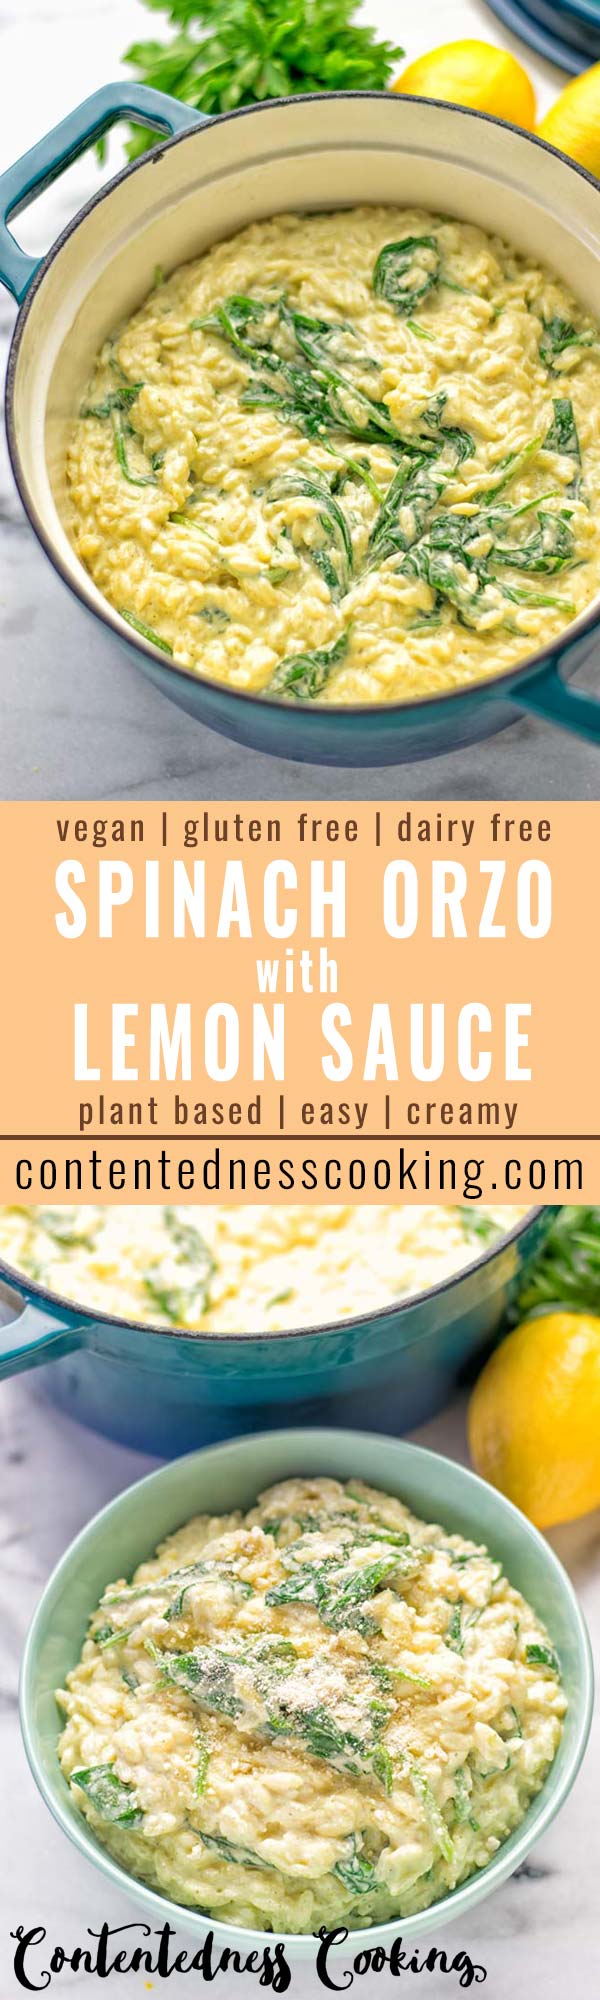 Creamy Spinach Orzo with Lemon Sauce | #vegan #glutenfree #contentednesscooking #plantbased #dairyfree